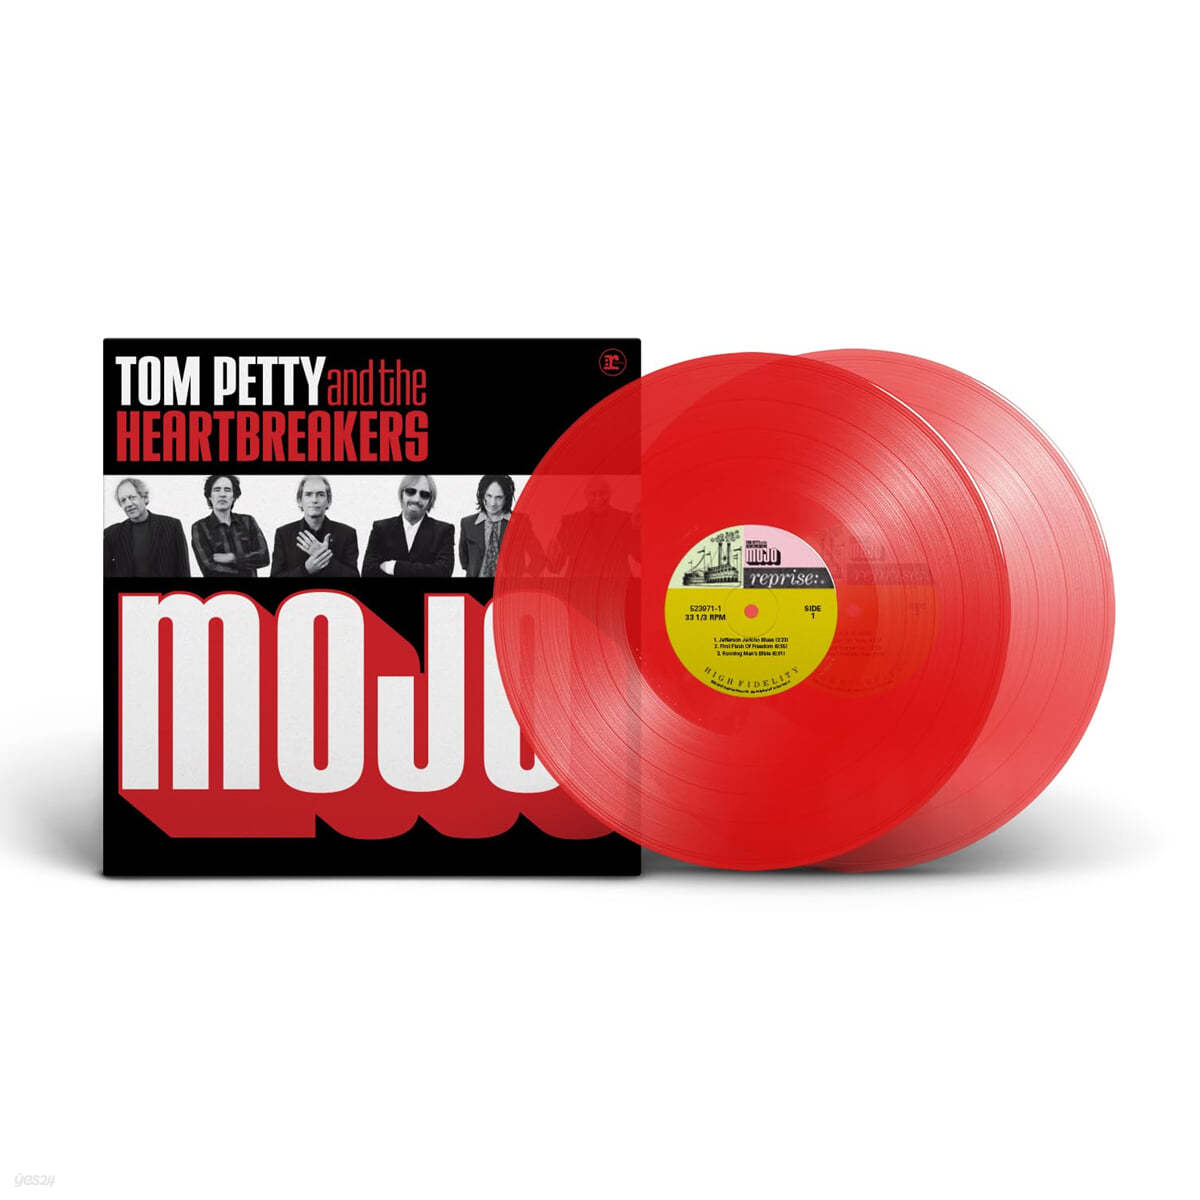 Tom Petty & The Heartbreakers (톰 페티 & 하트브레이커스) - Mojo [투명 루비 레드 컬러 2LP]